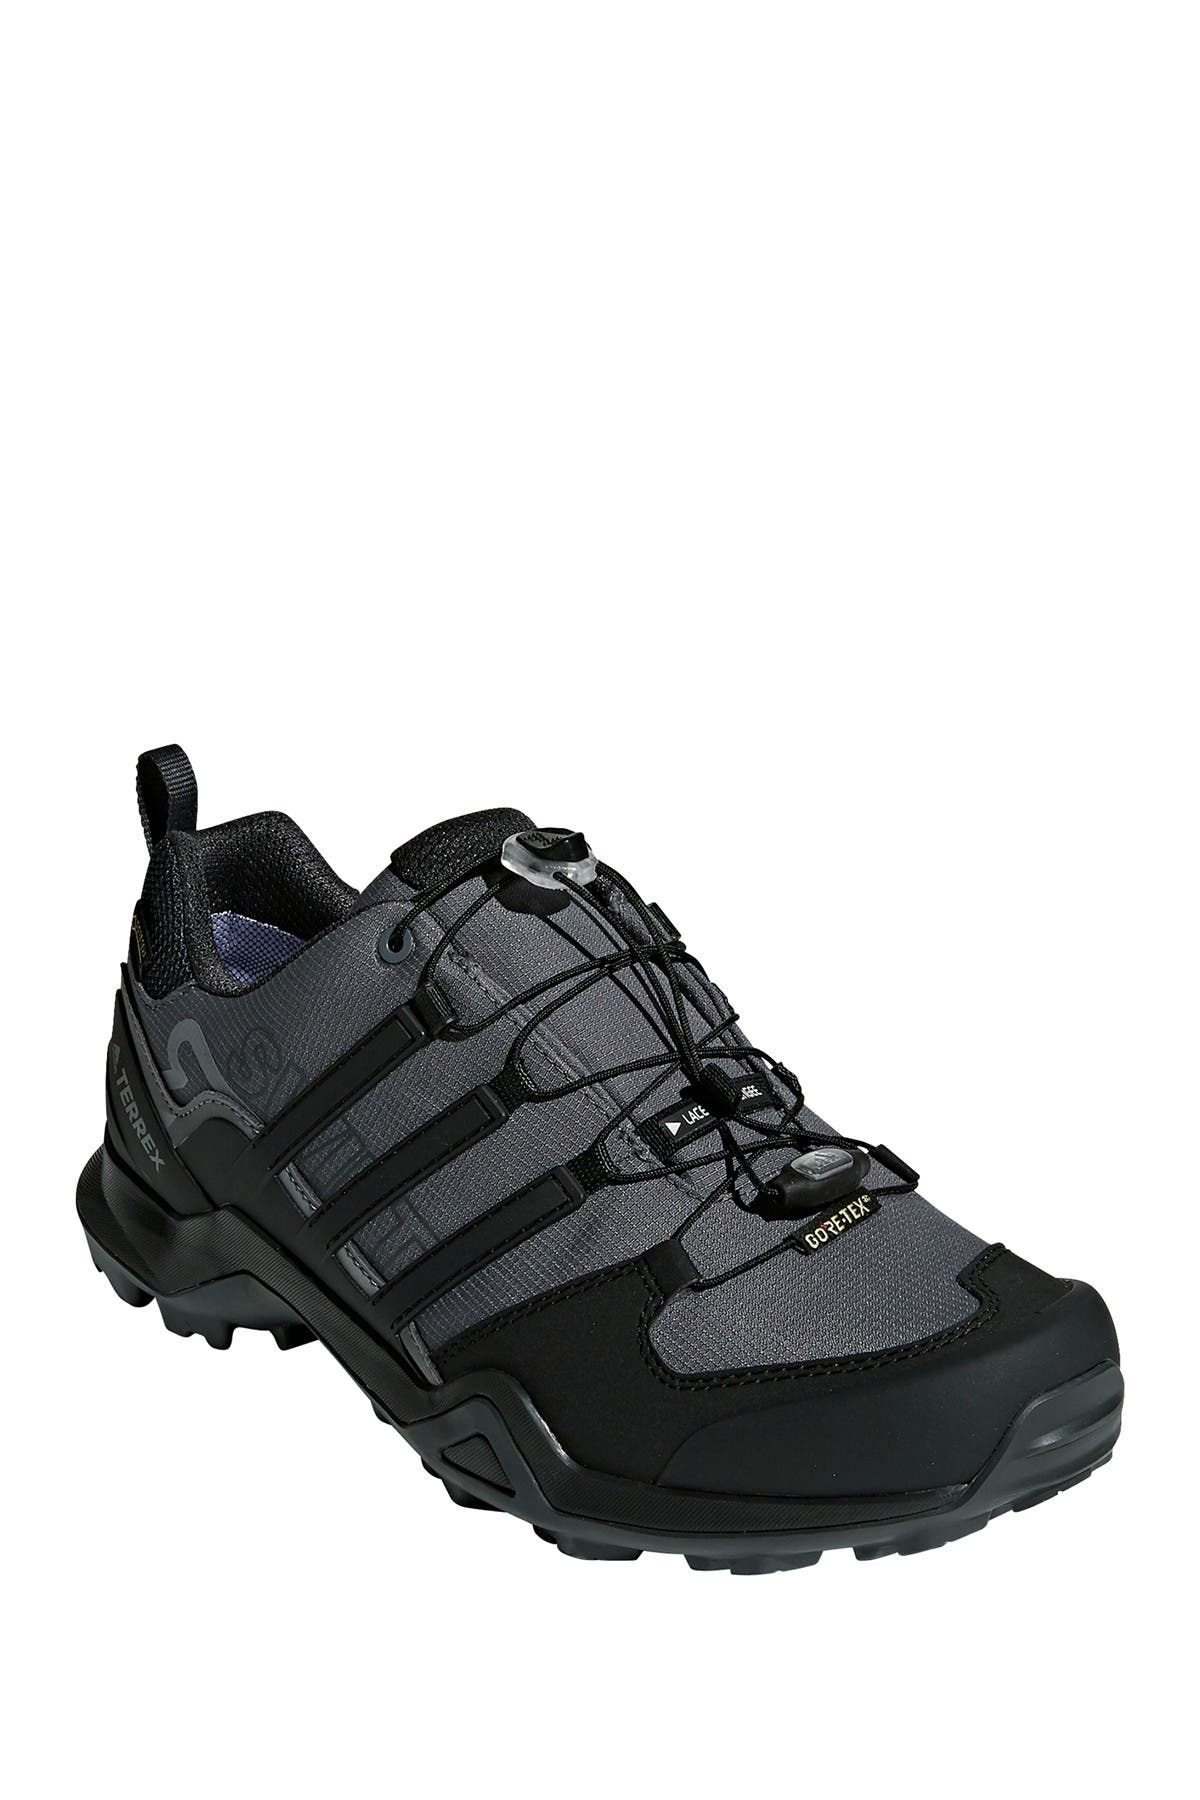 adidas terrex swift r2 gtx hiking shoes